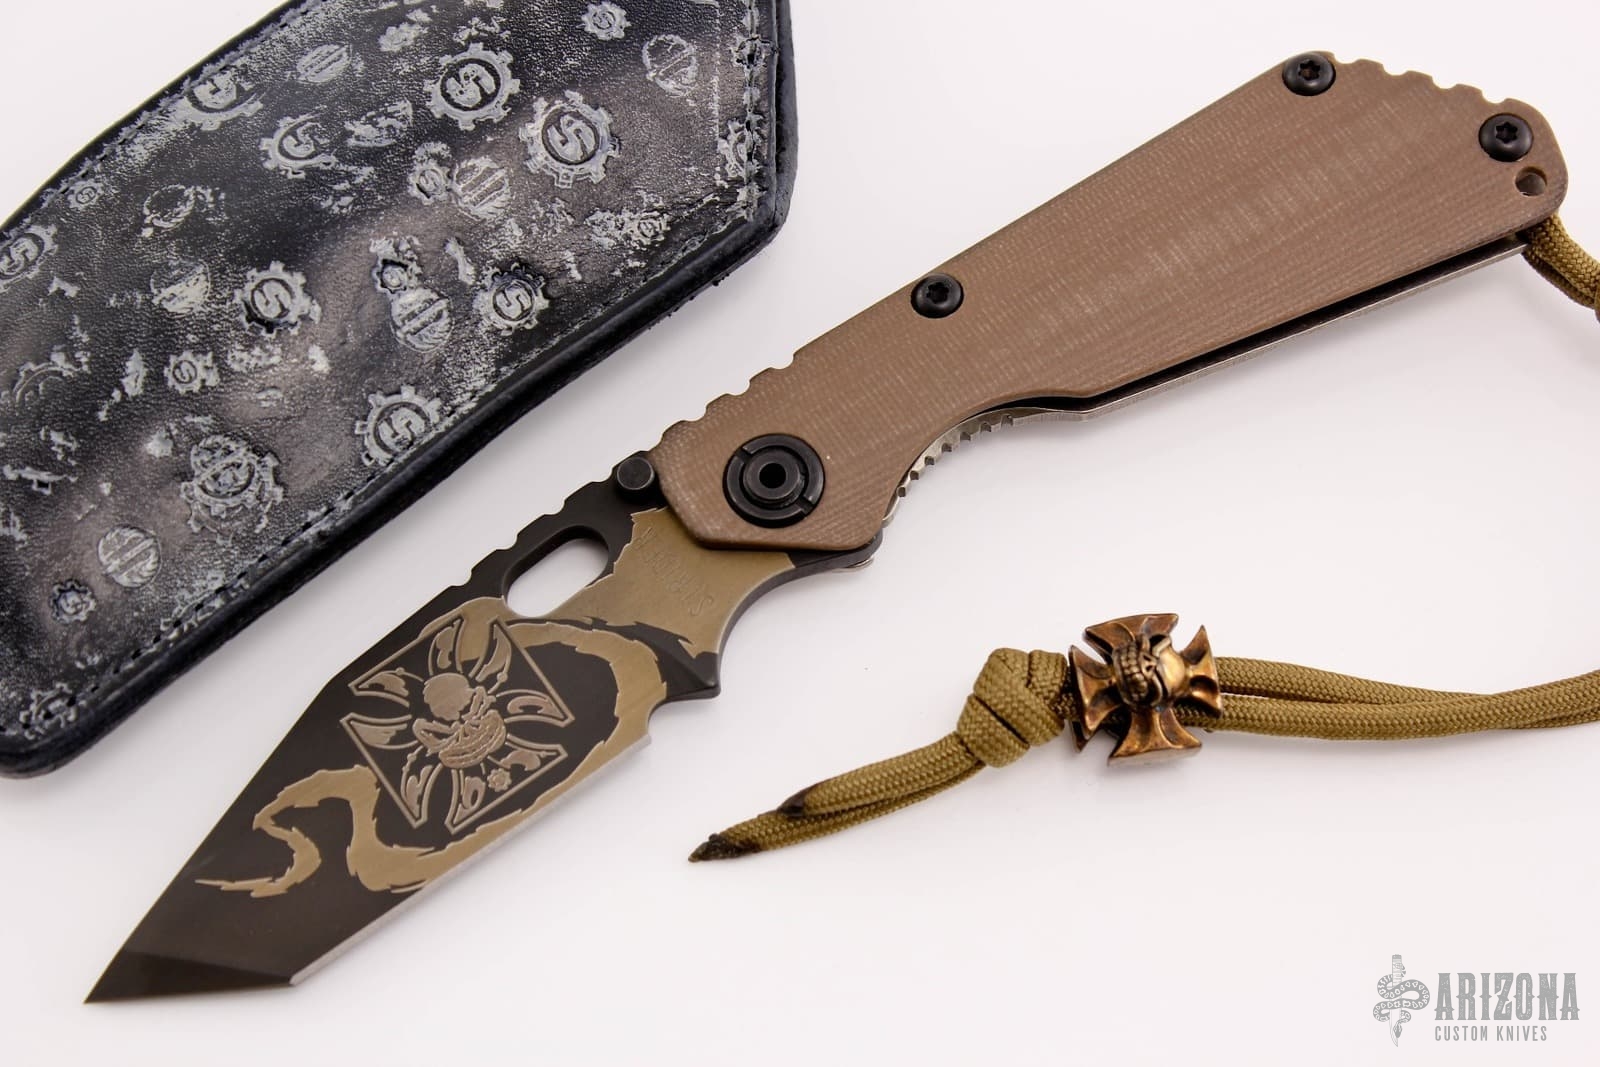 Maltese Cross SnG CC | Arizona Custom Knives